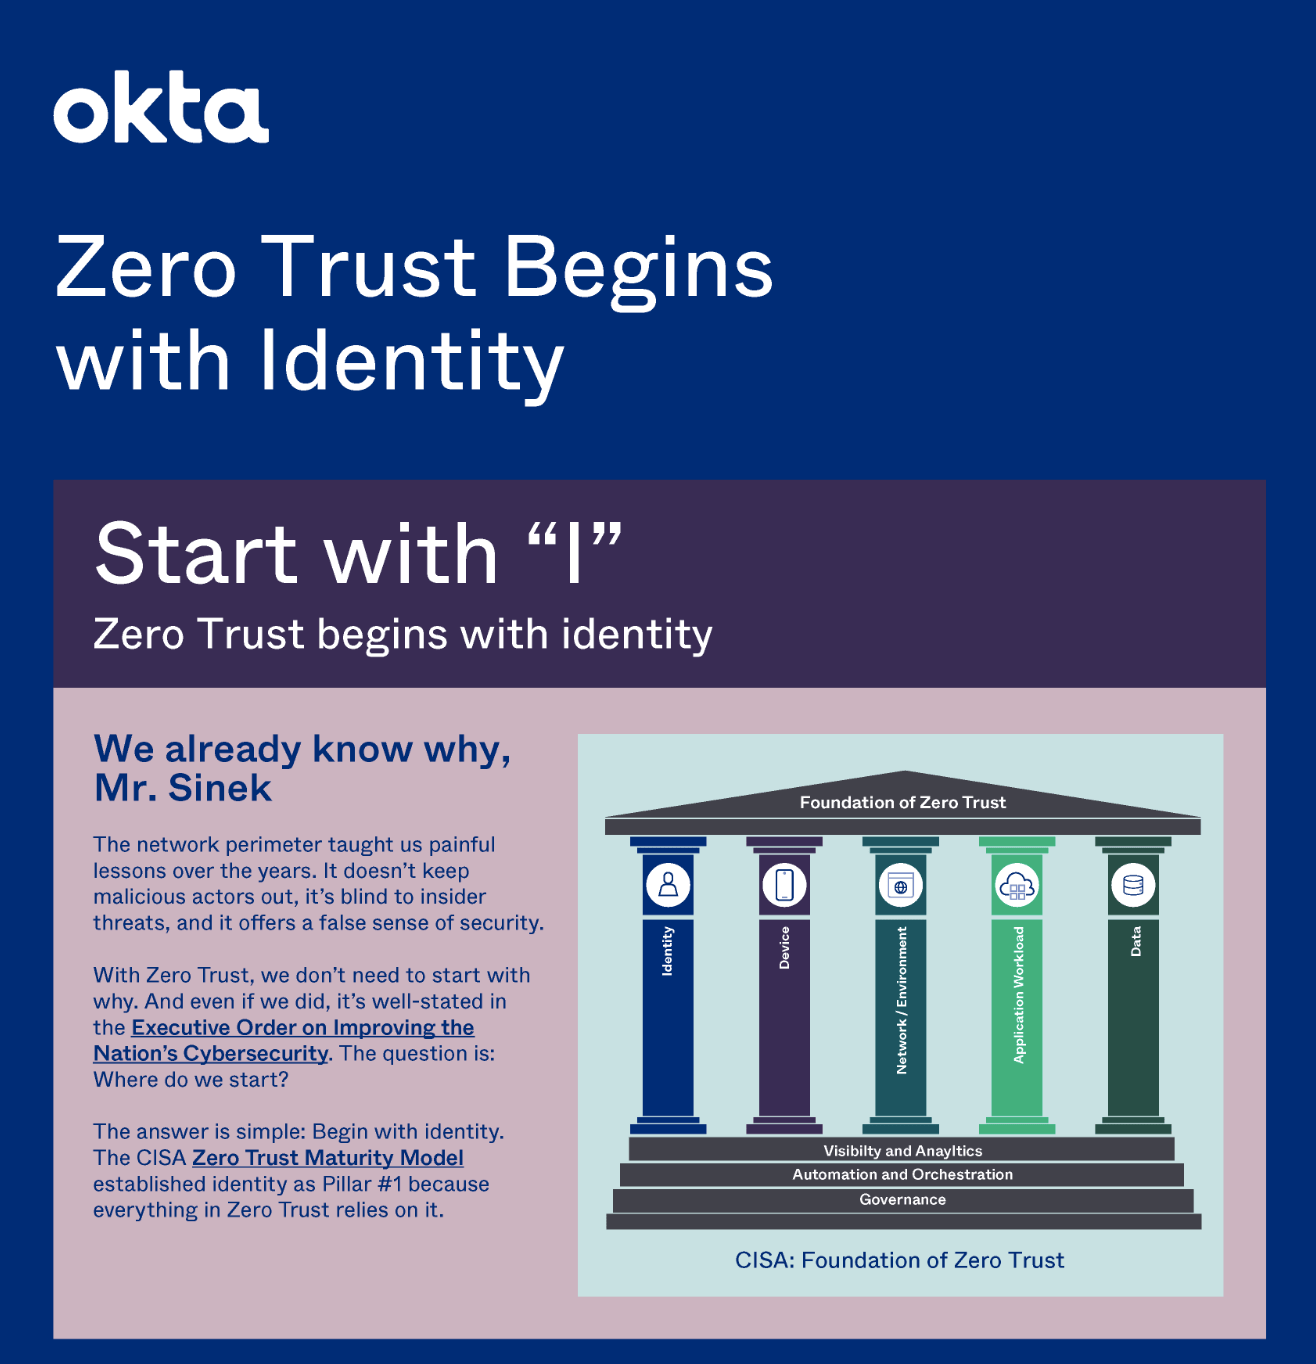 okta zero identity cover - Zero Trust Begins with Identity